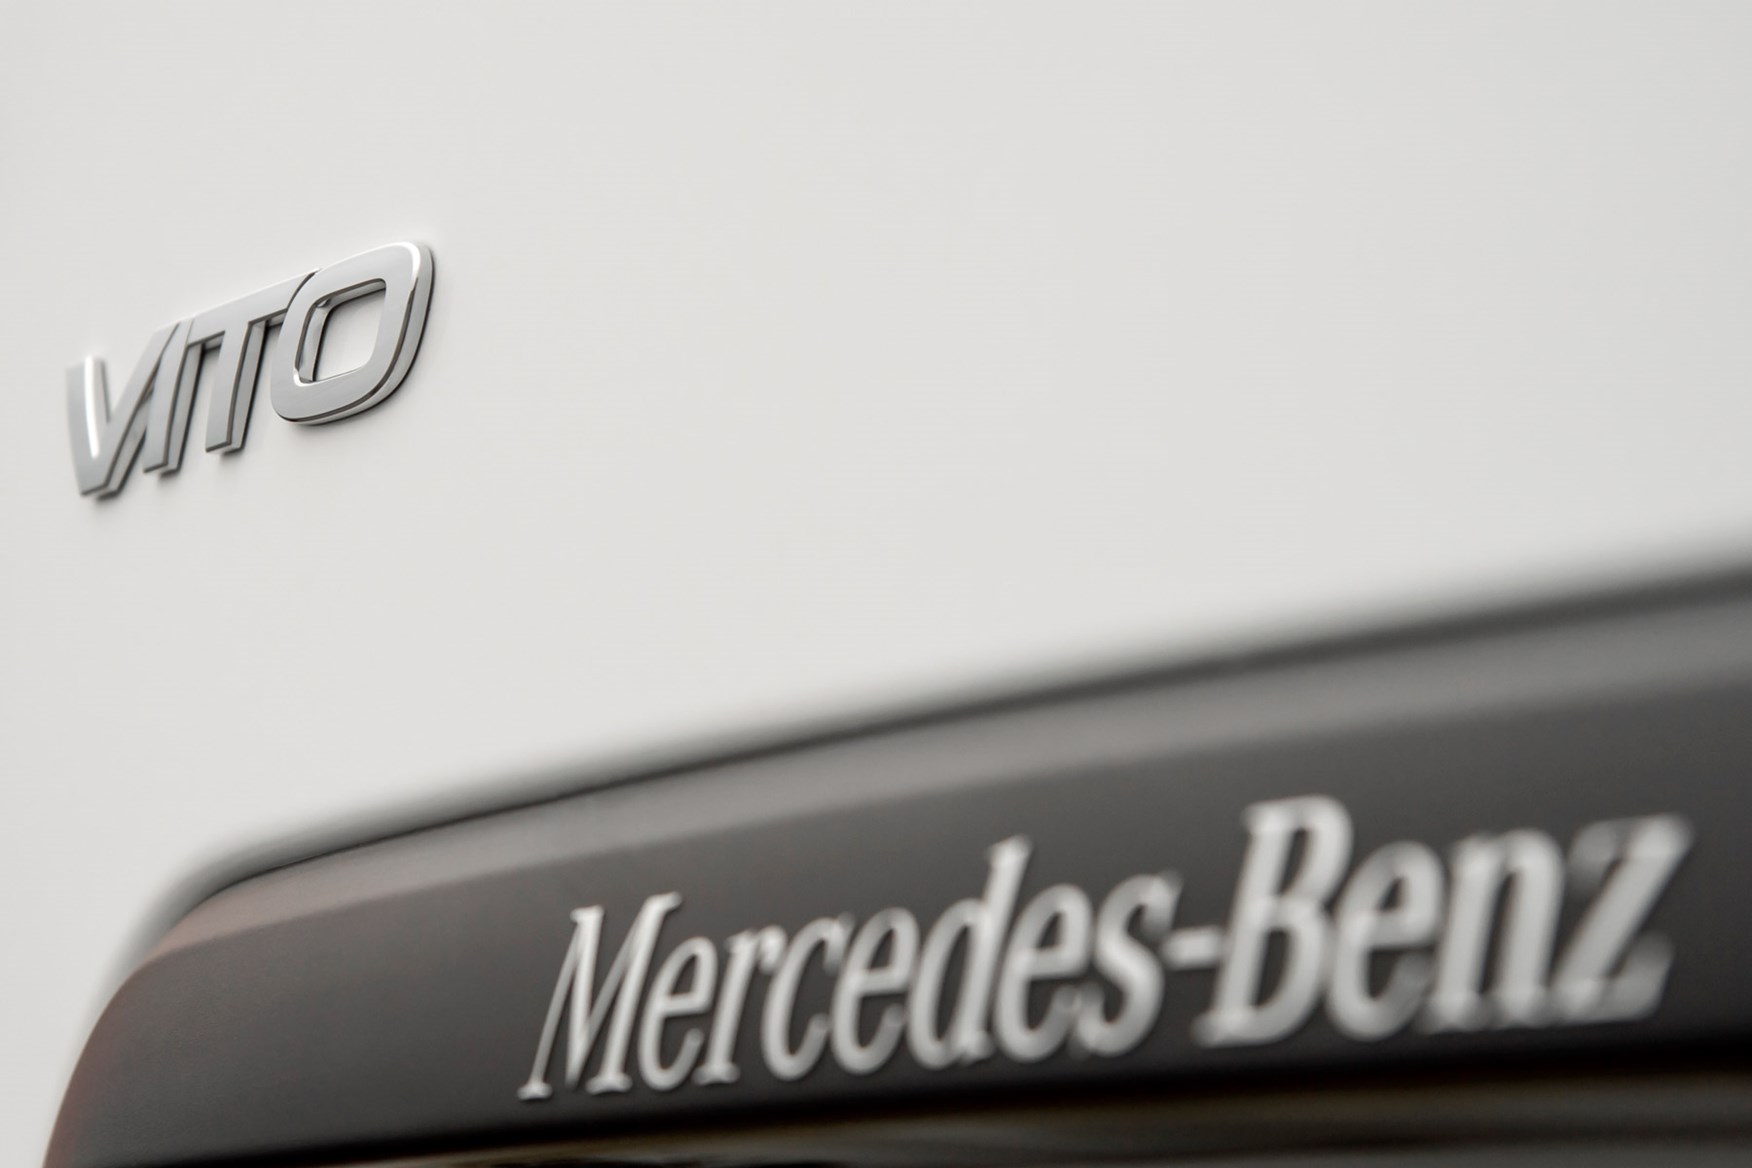 Mercedes-Benz Vito full review on Parkers Vans - Mercedes-Benz detail